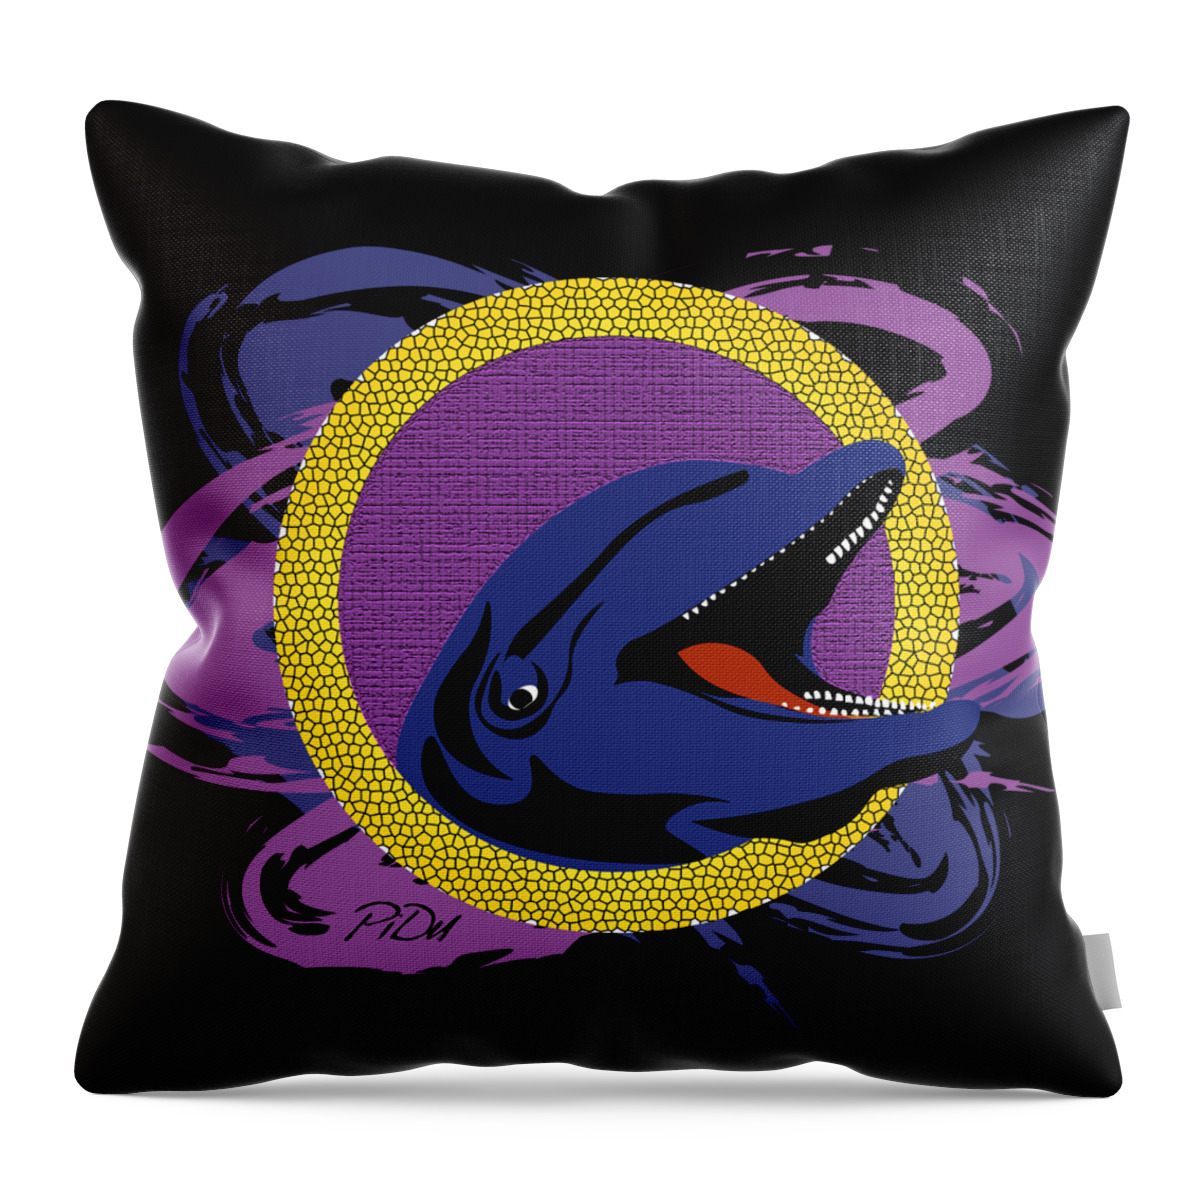 Blue Throw Pillow featuring the digital art Blue Dolphin by Piotr Dulski